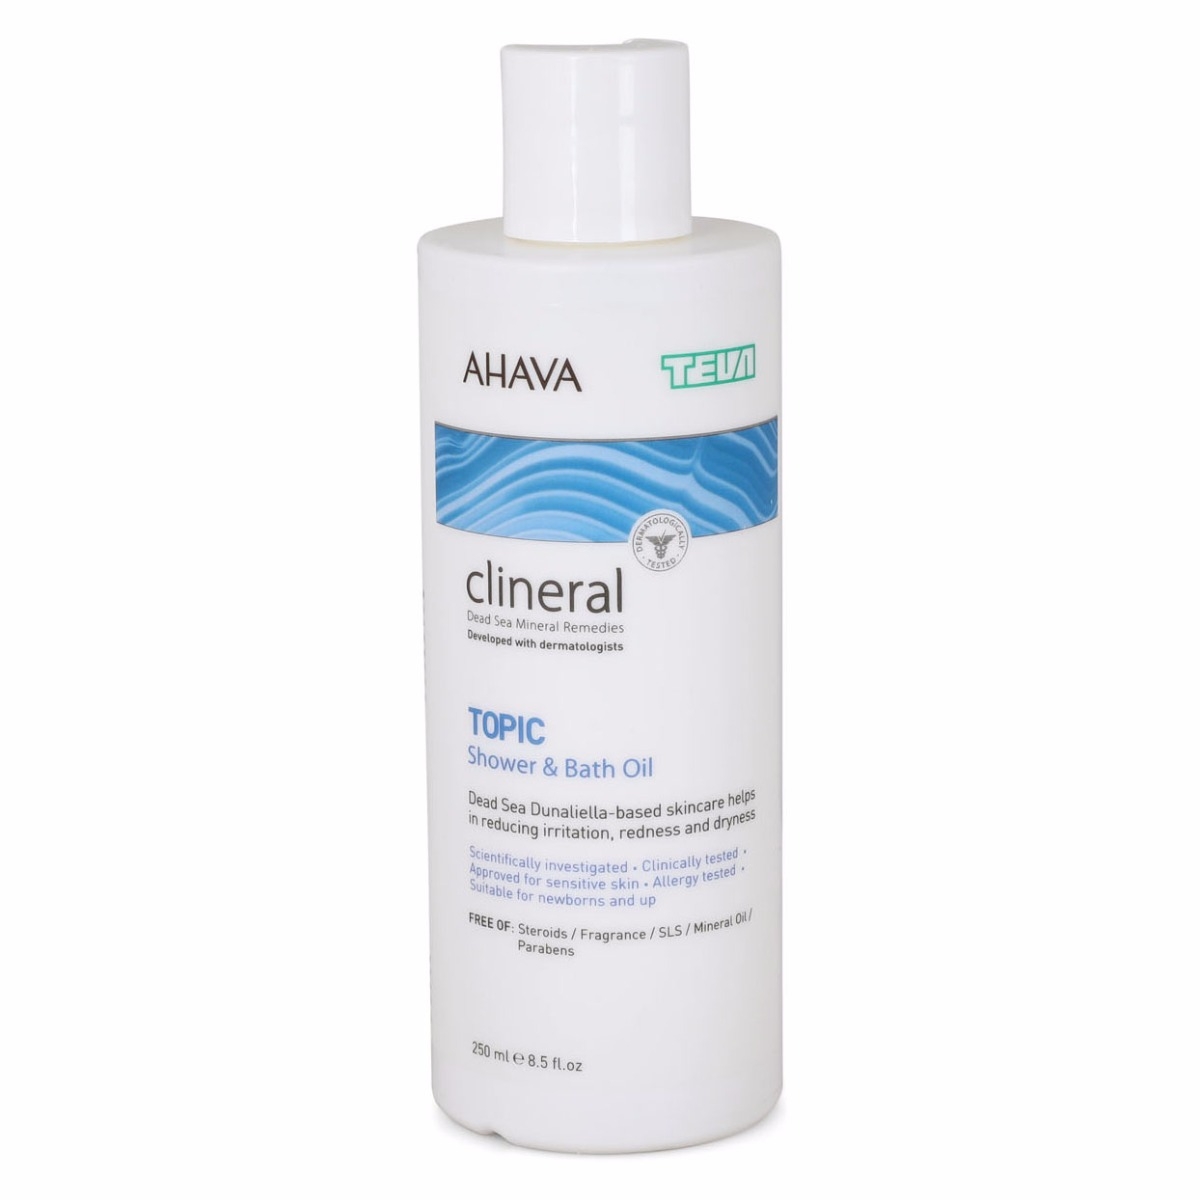 Clineral by AHAVA & Teva TOPIC Shower & Bath Oil - 1